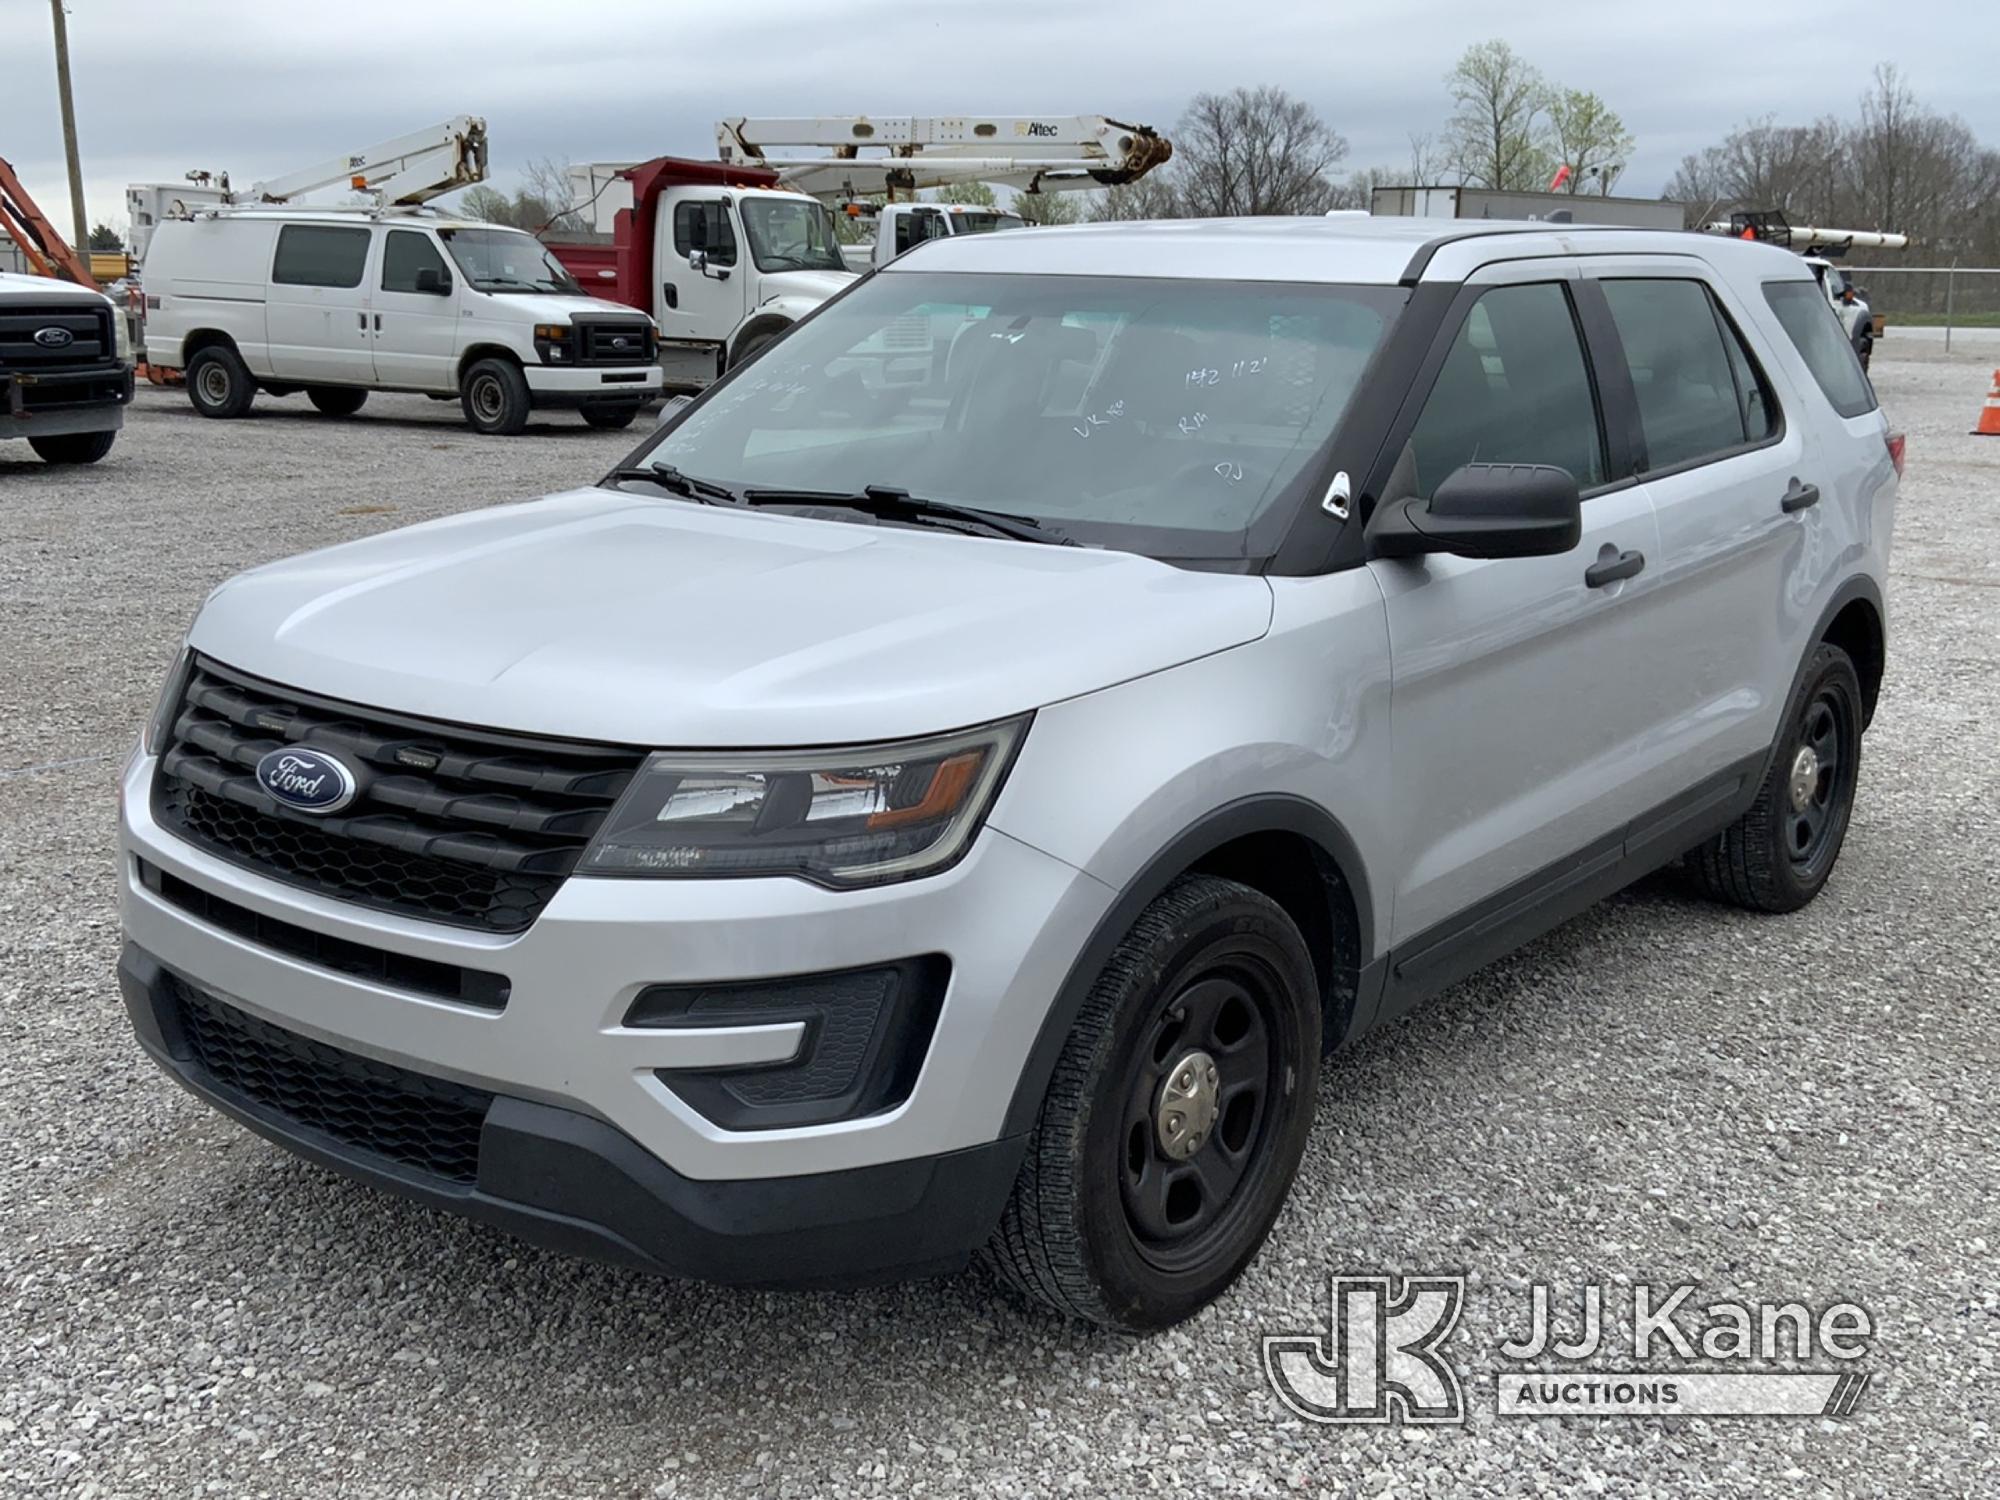 (Verona, KY) 2018 Ford Explorer AWD Police Interceptor 4-Door Sport Utility Vehicle Runs & Moves